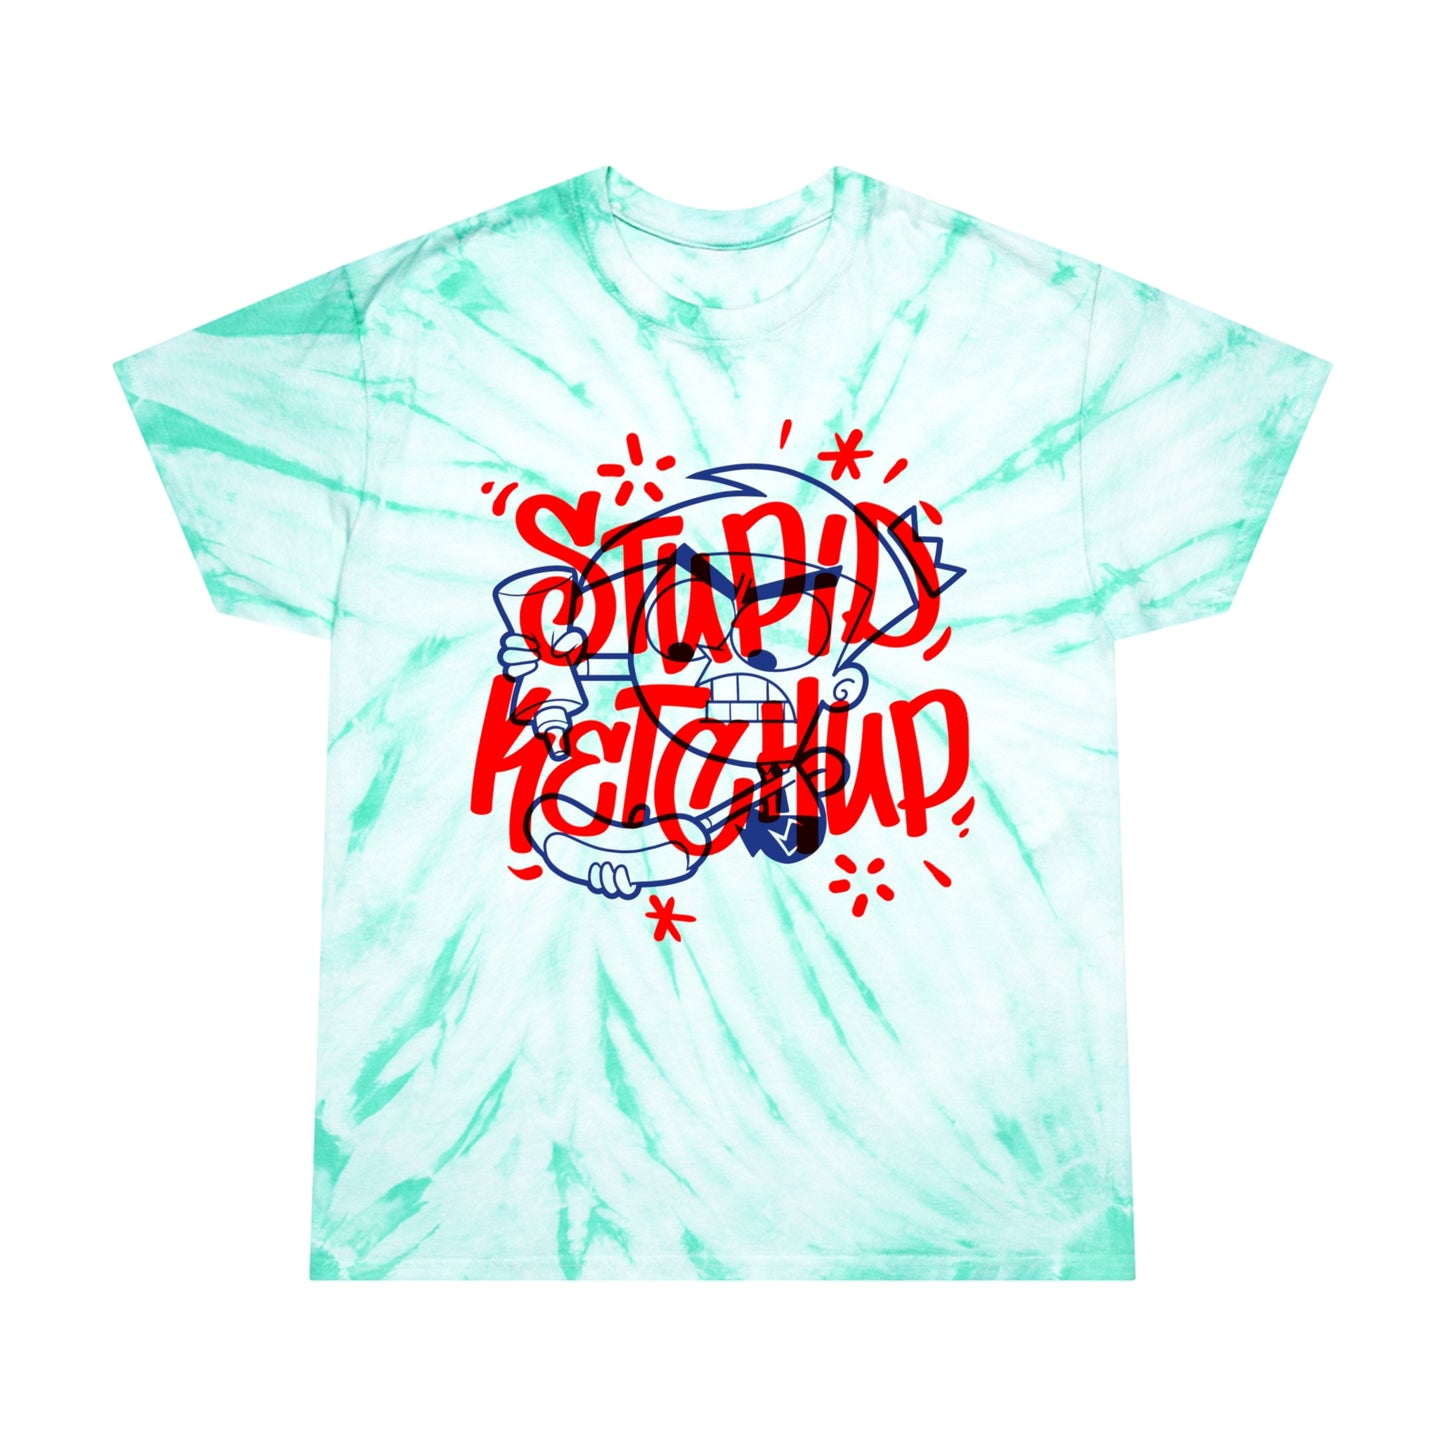 Stupid Ketchup tie-dye t-shirt